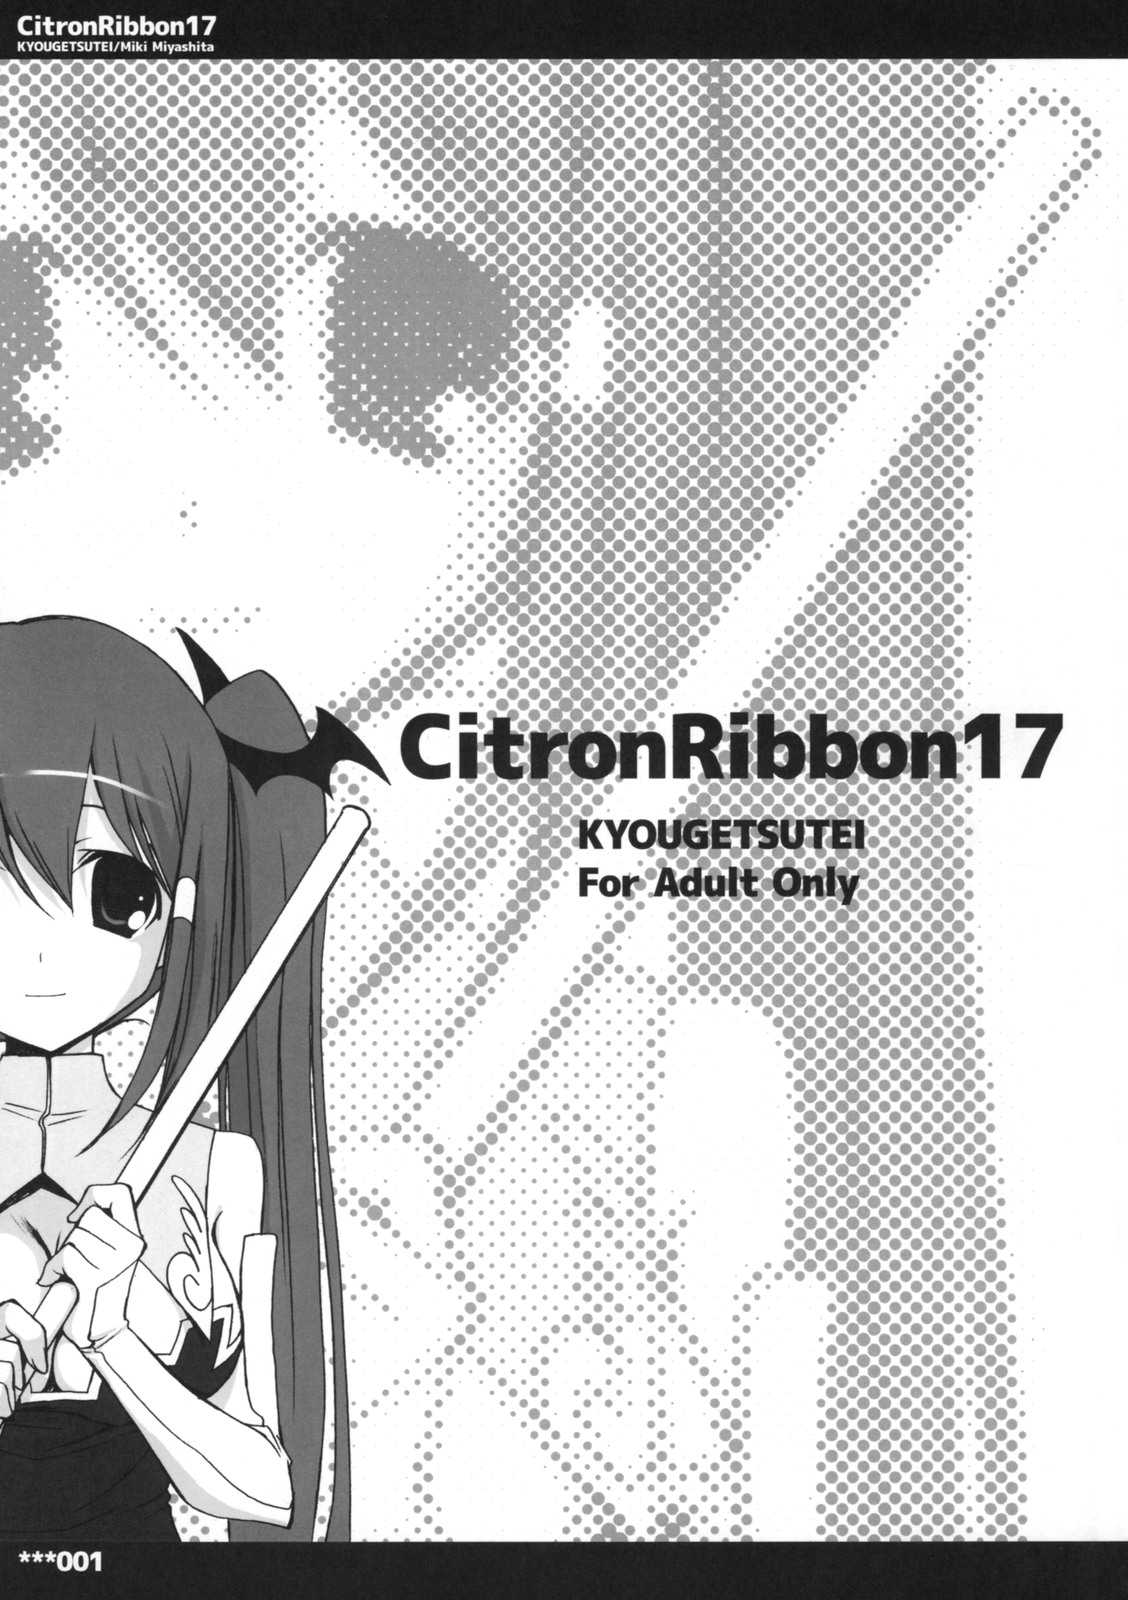 [Kyougetsutei] Citron Ribbon 17 